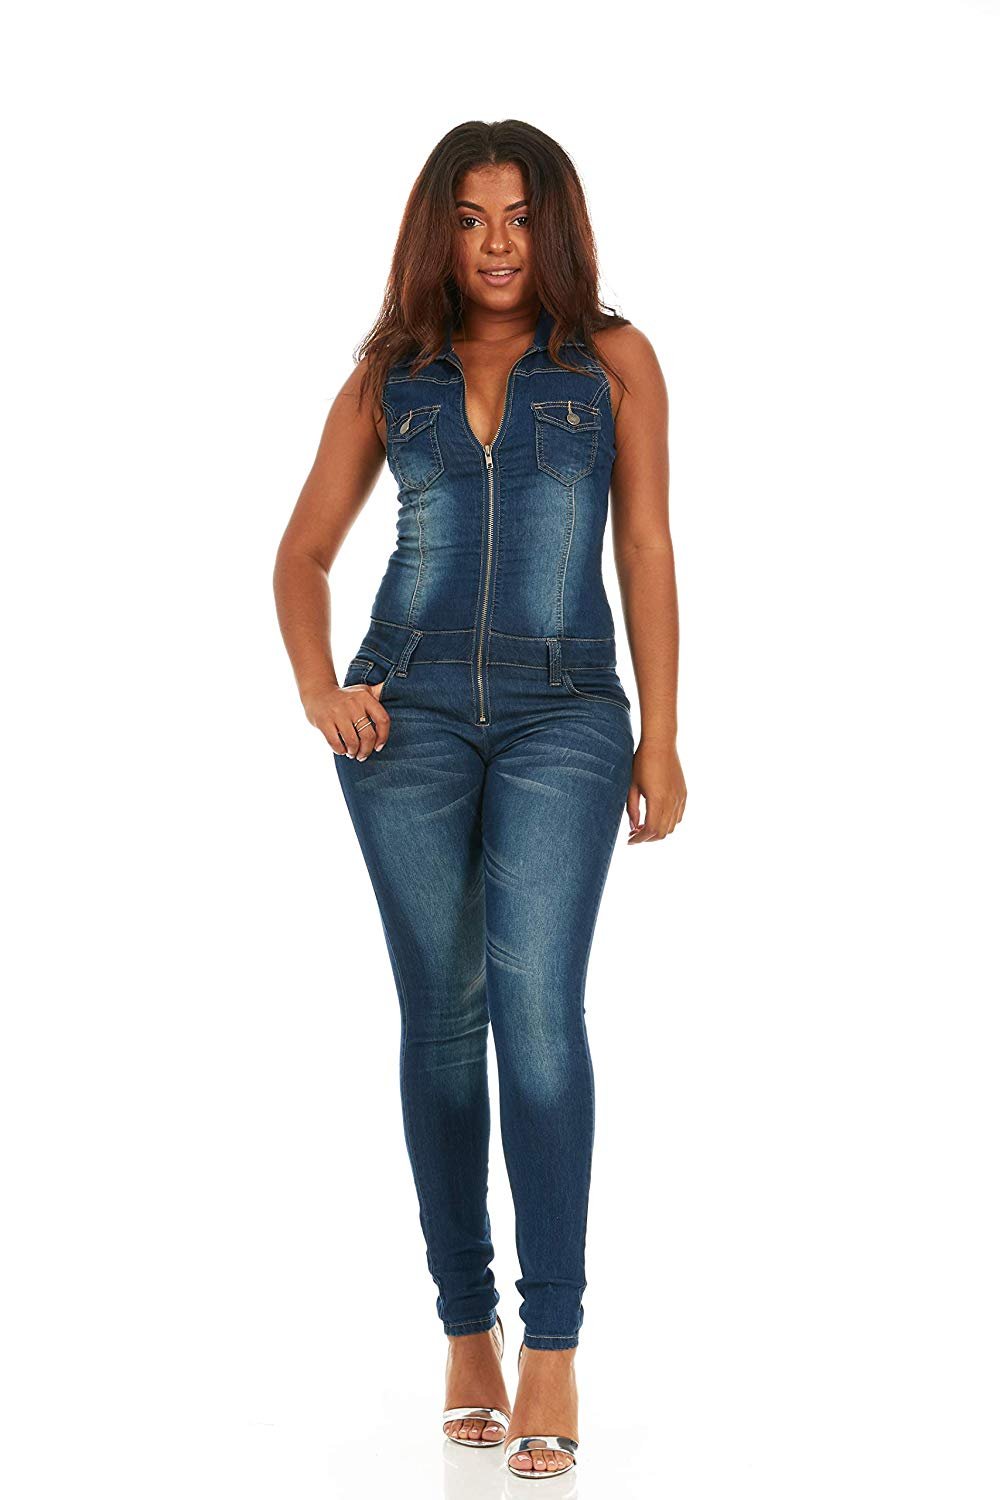 Cute Teen Girl Denim Jumpsuit Jeans for Teen Girls Sleeveless Skinny Fit Overall Plus Size 20W Dark Blue Denim - image 2 of 6